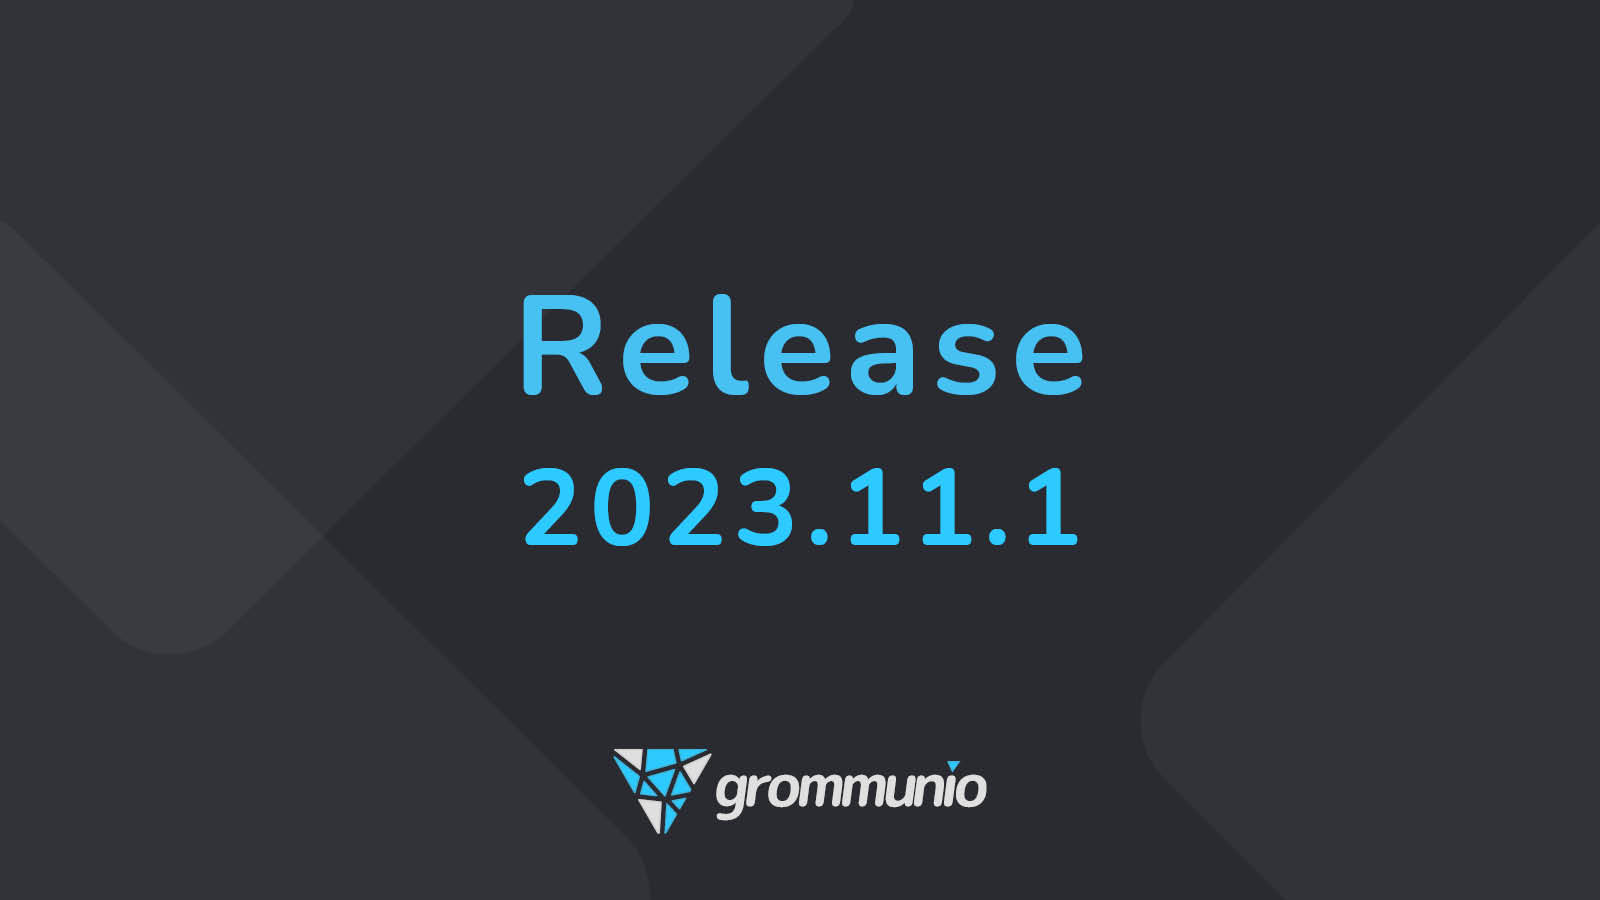 Presentation of grommunio 2023.11.1